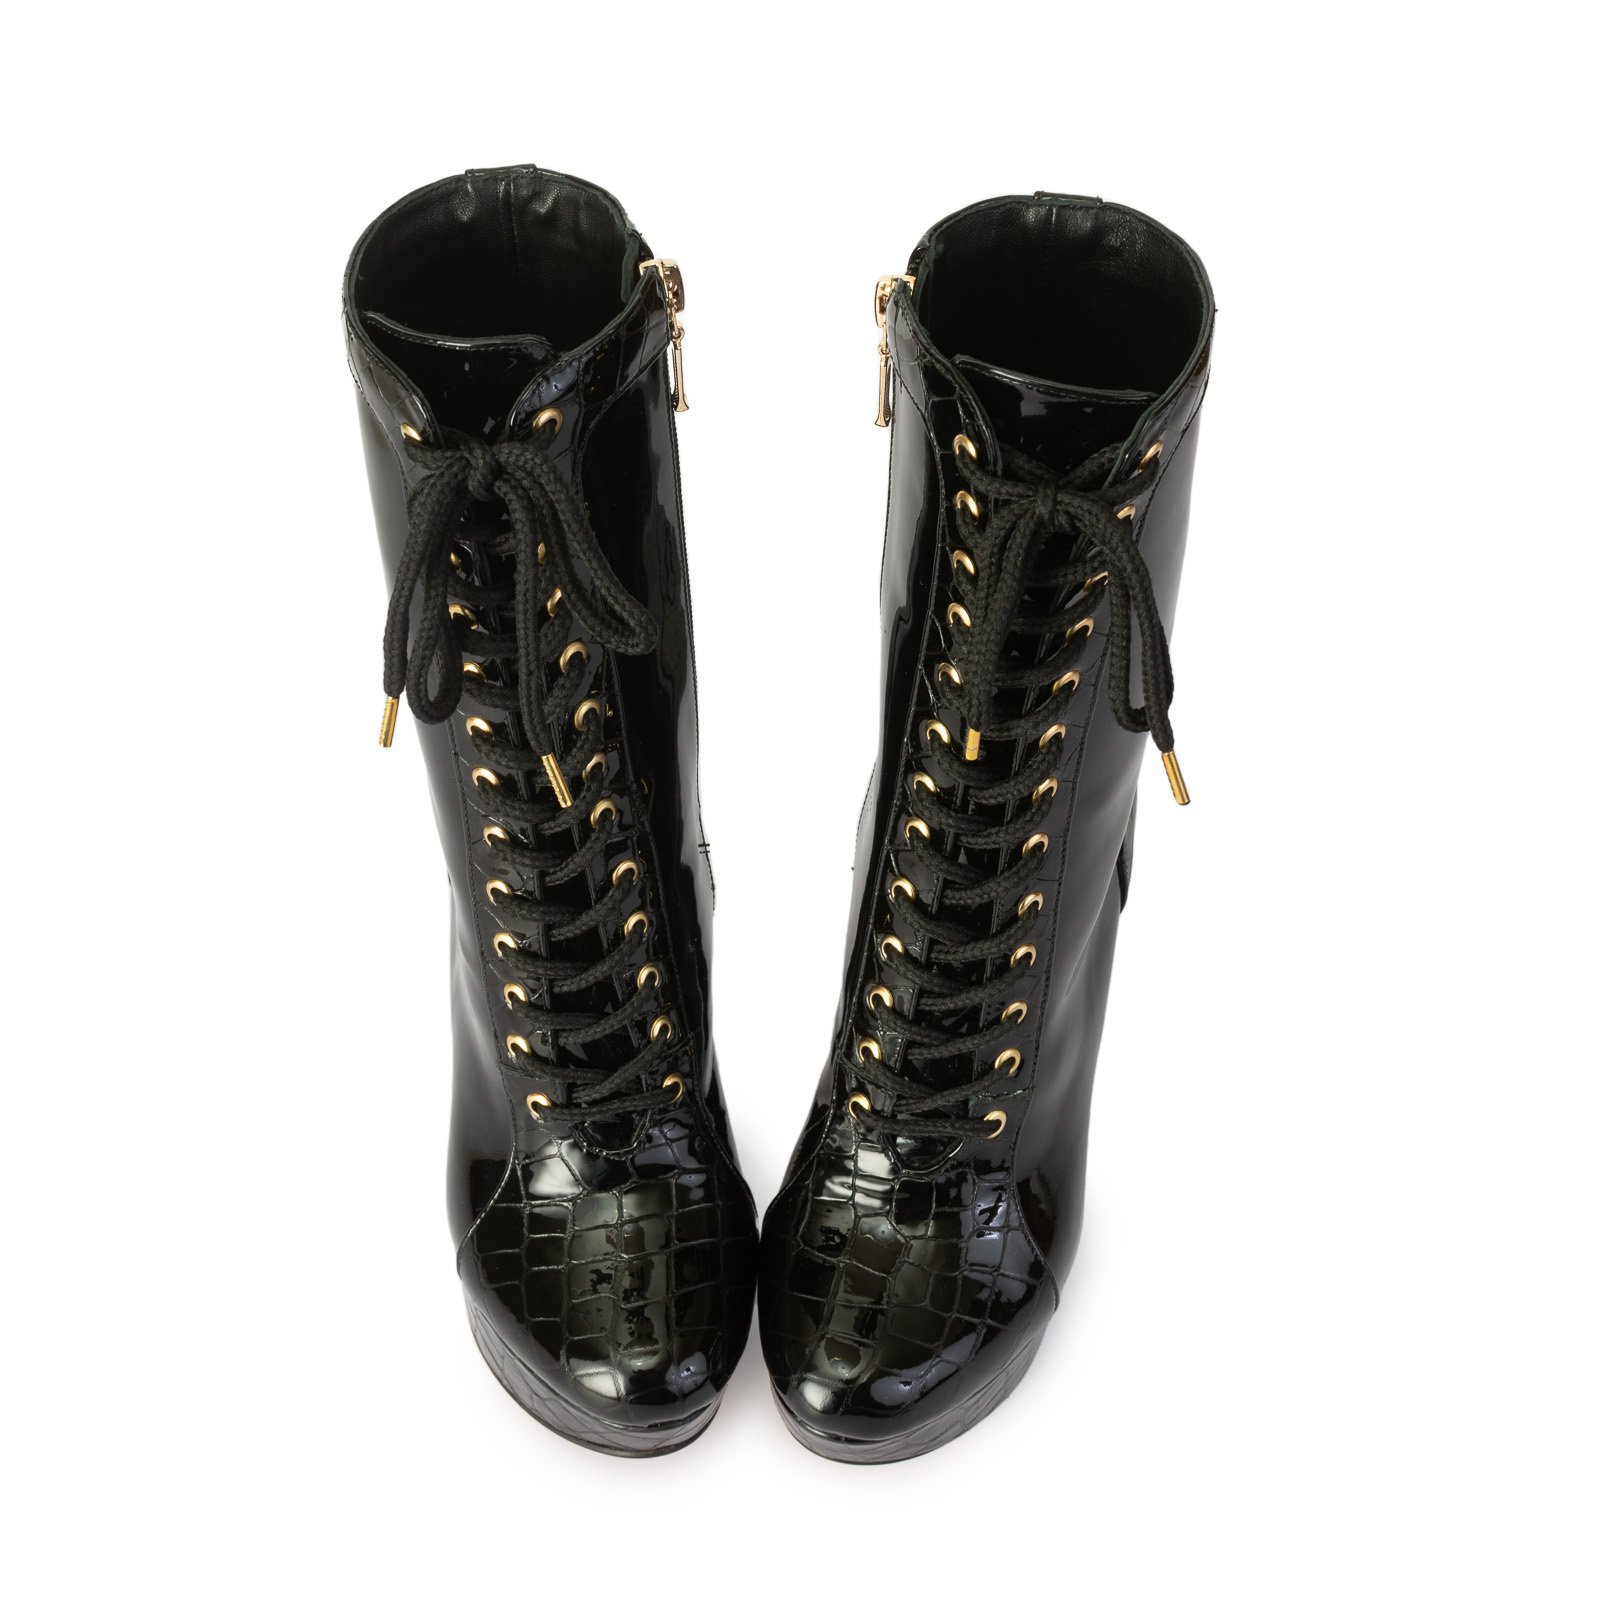 Sexy mid-calf black boots